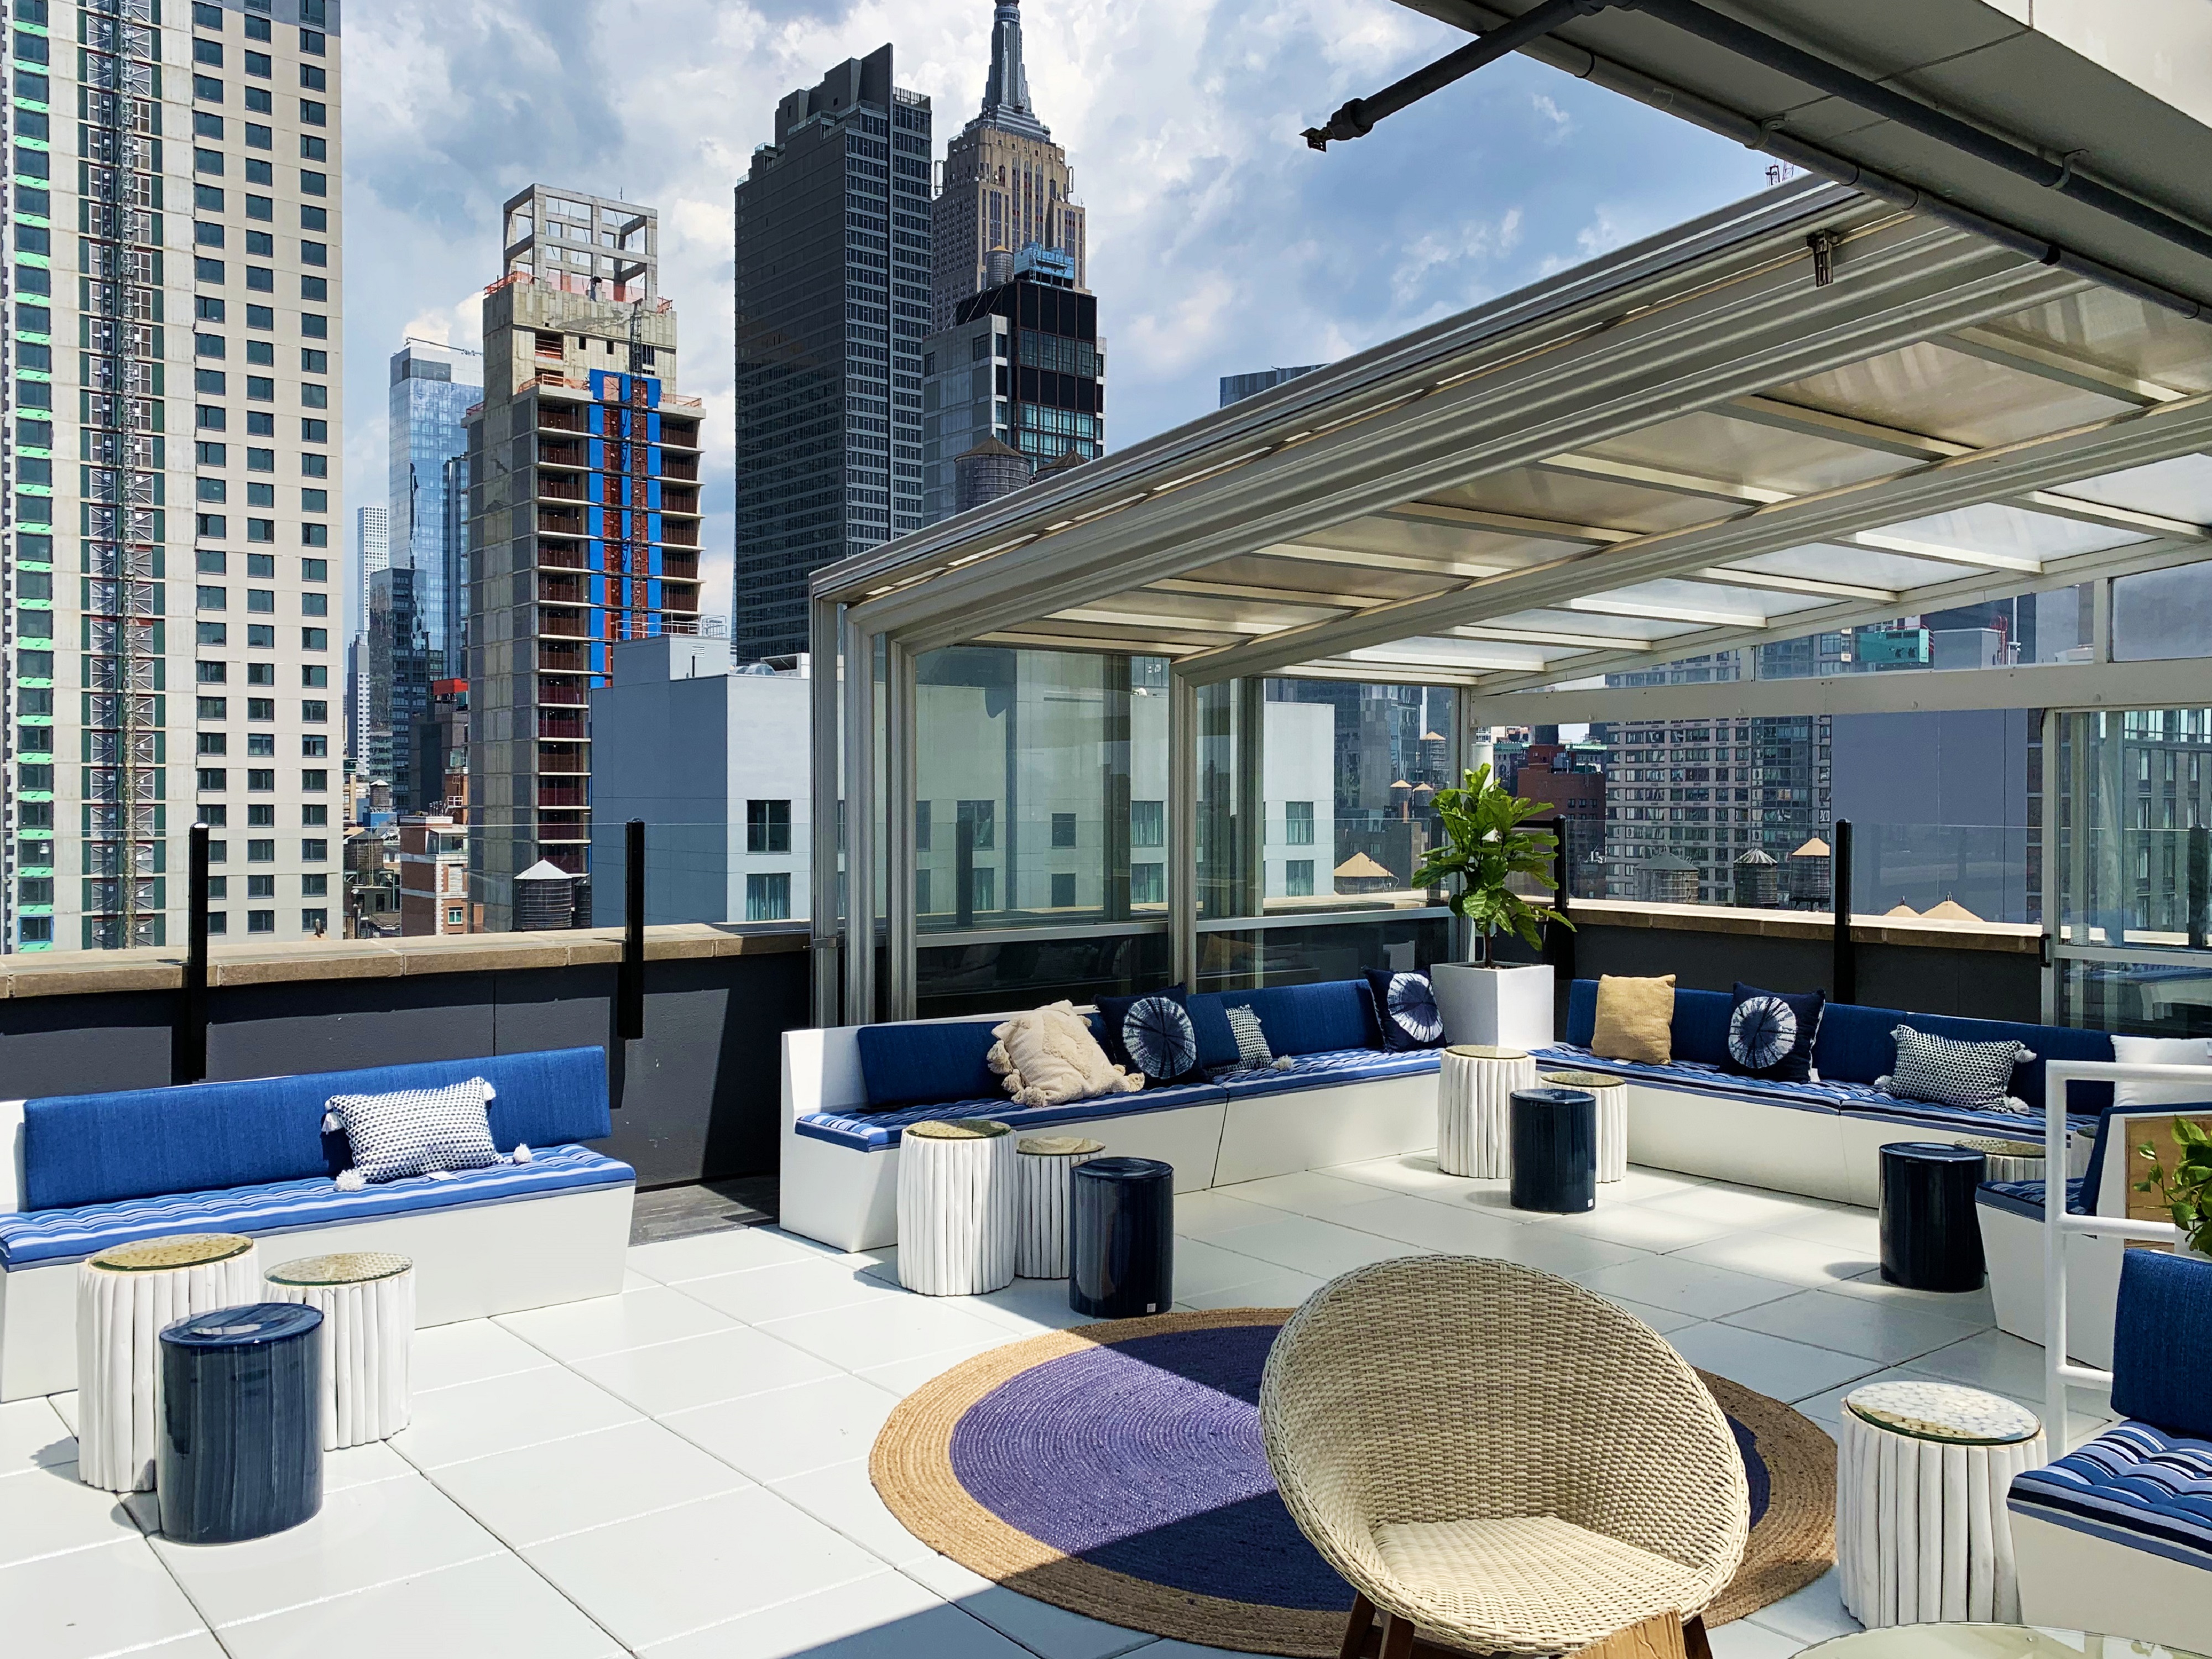 Sandbar Rooftop Bar seating space